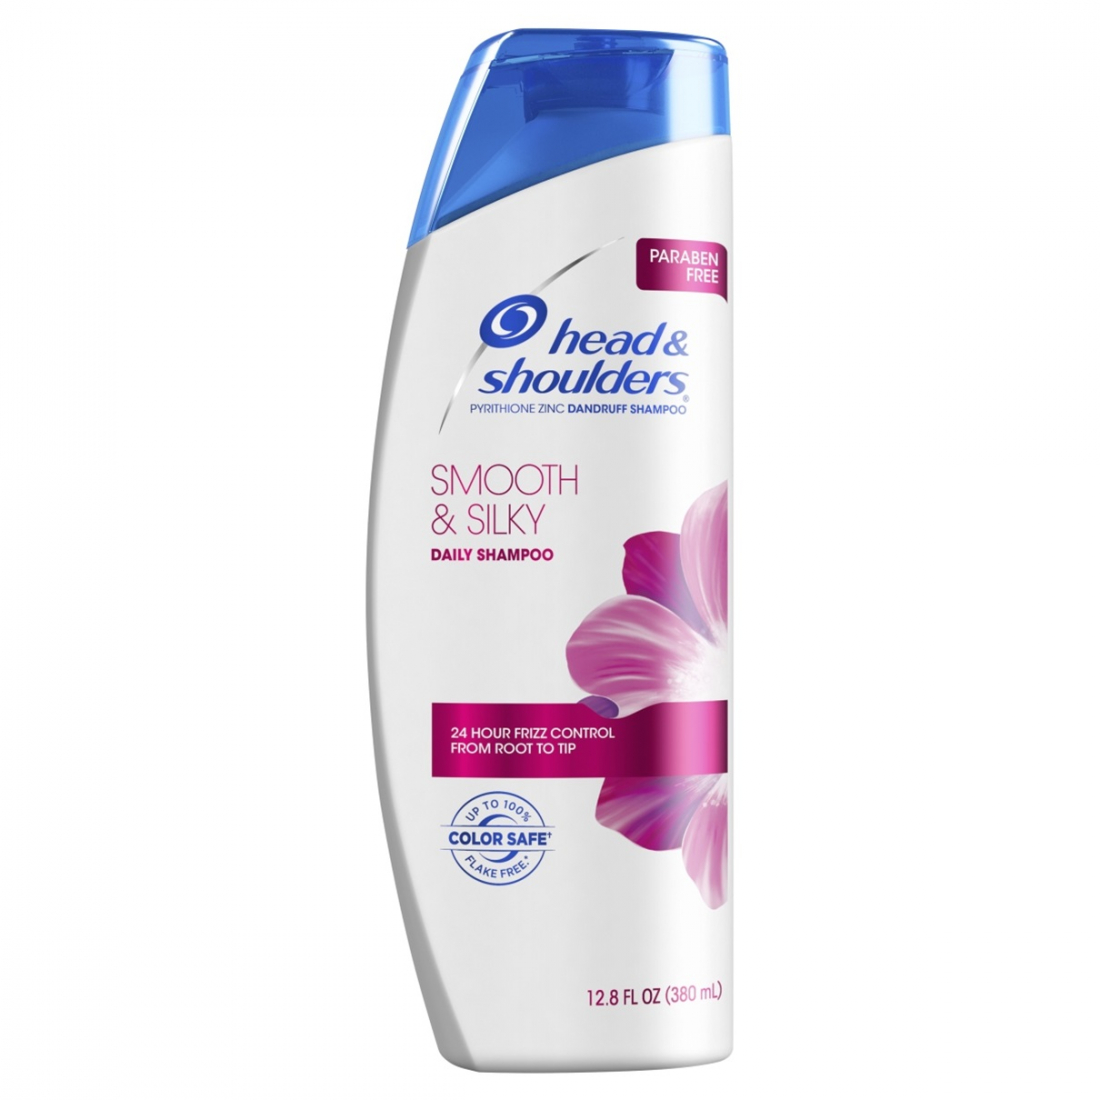 'Smooth & Silky' Shampoo - 360 ml